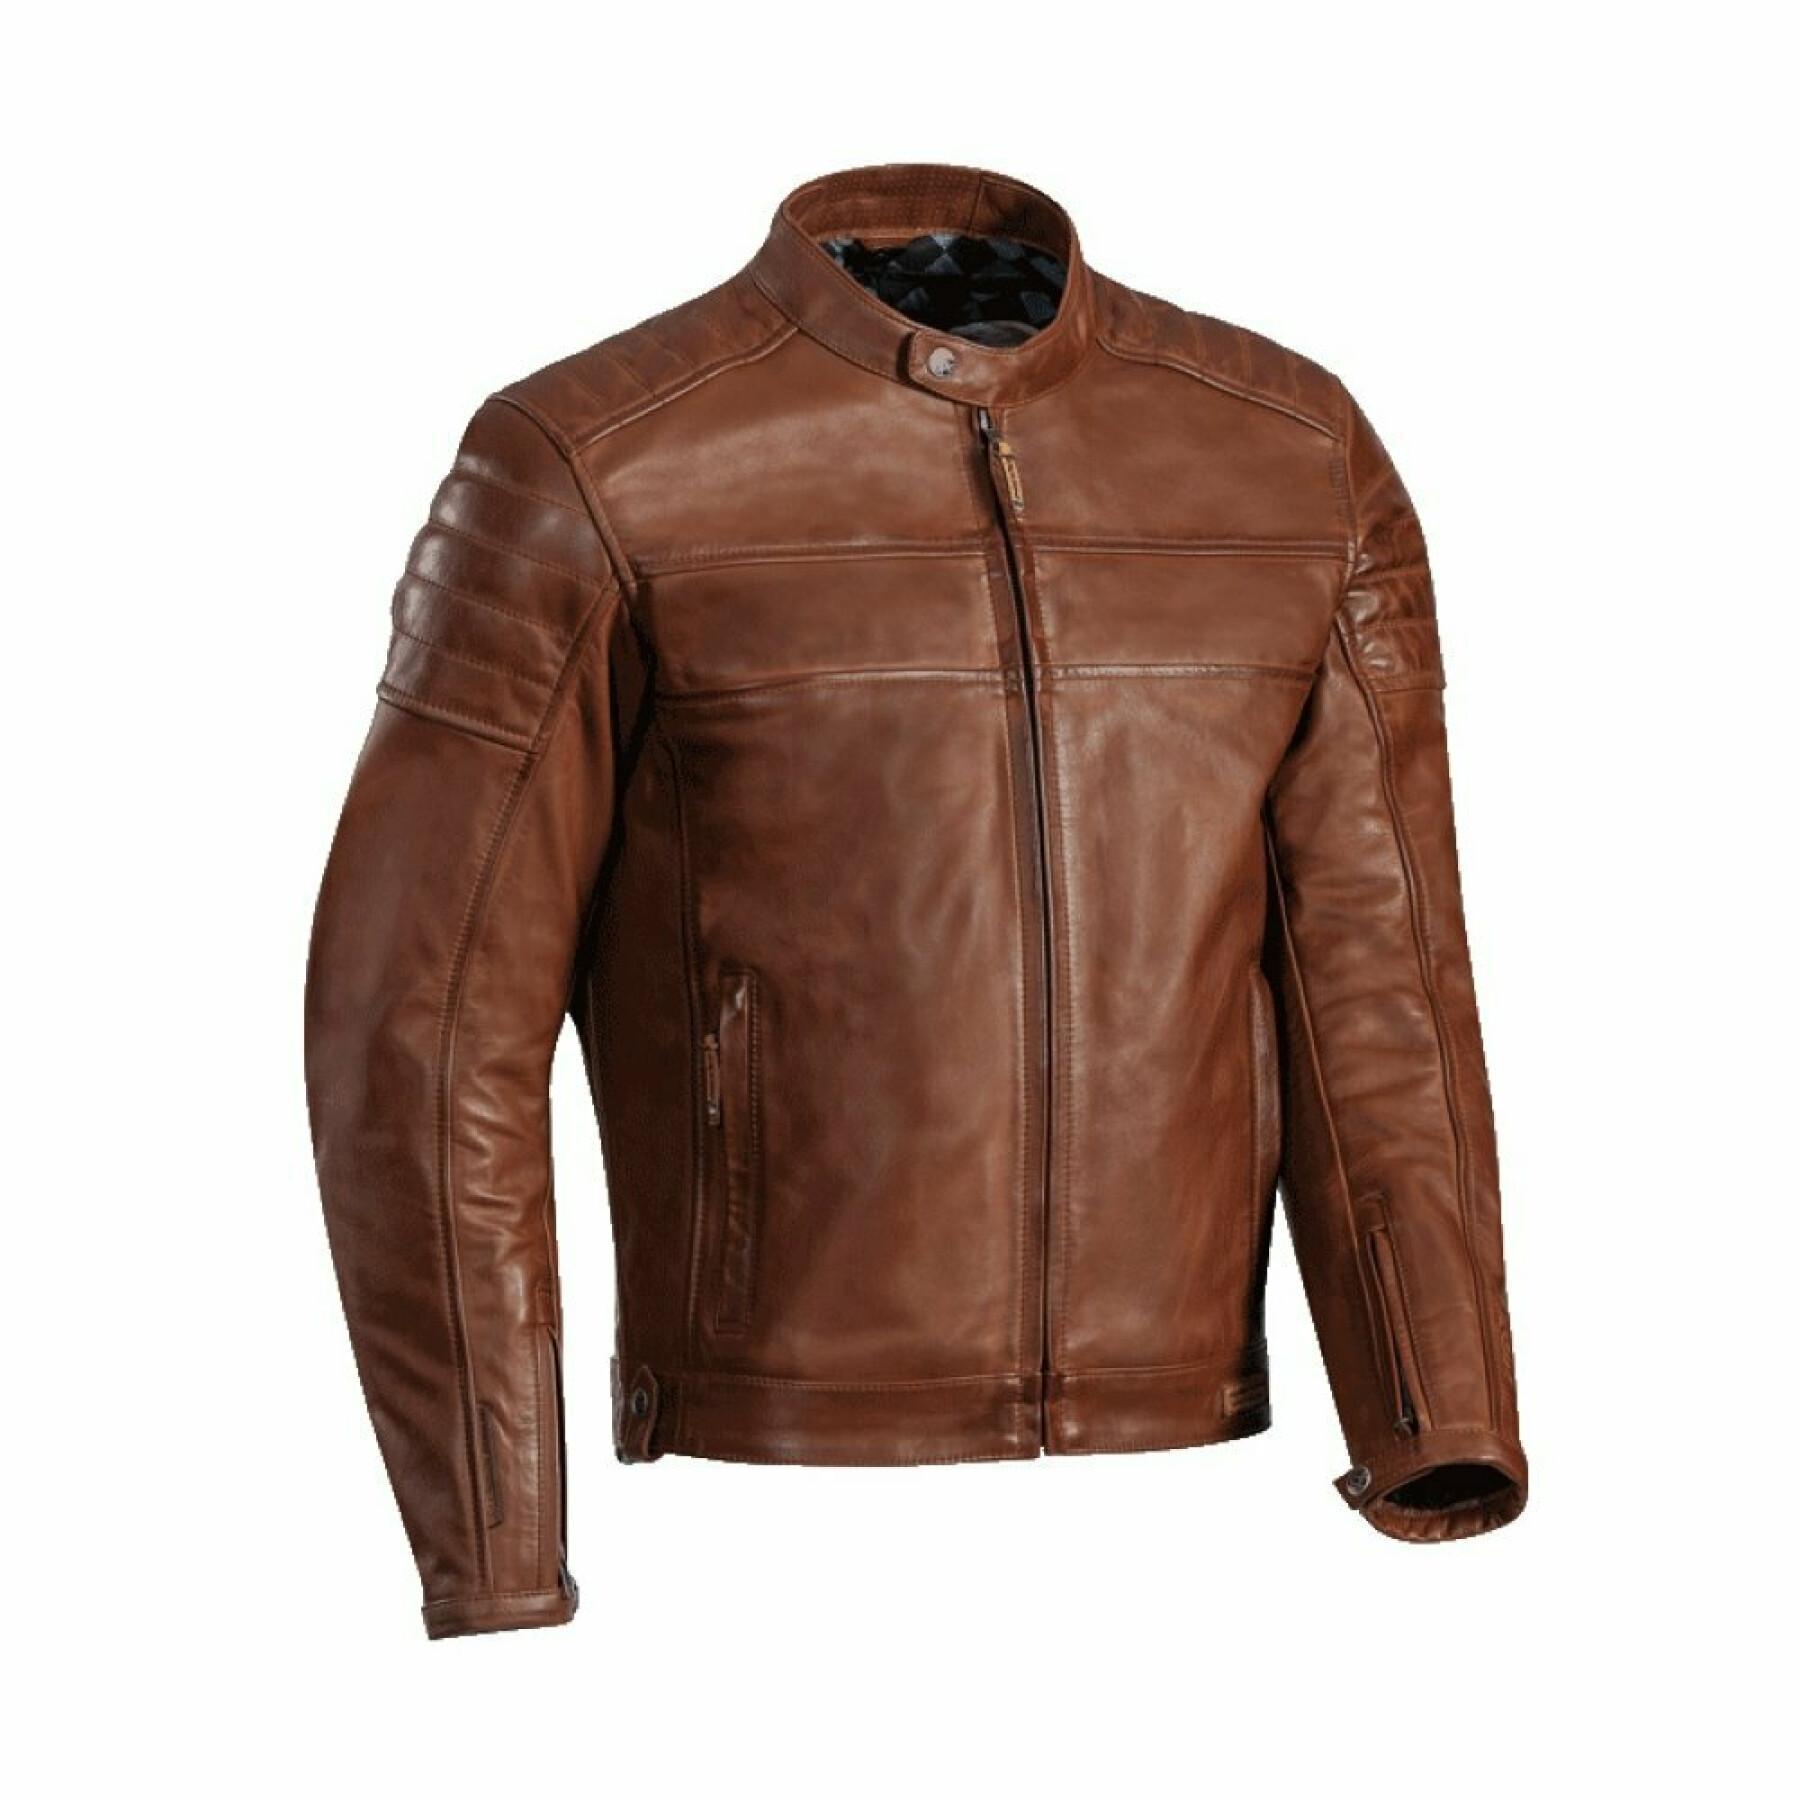 Leather motorcycle jacket Ixon spark